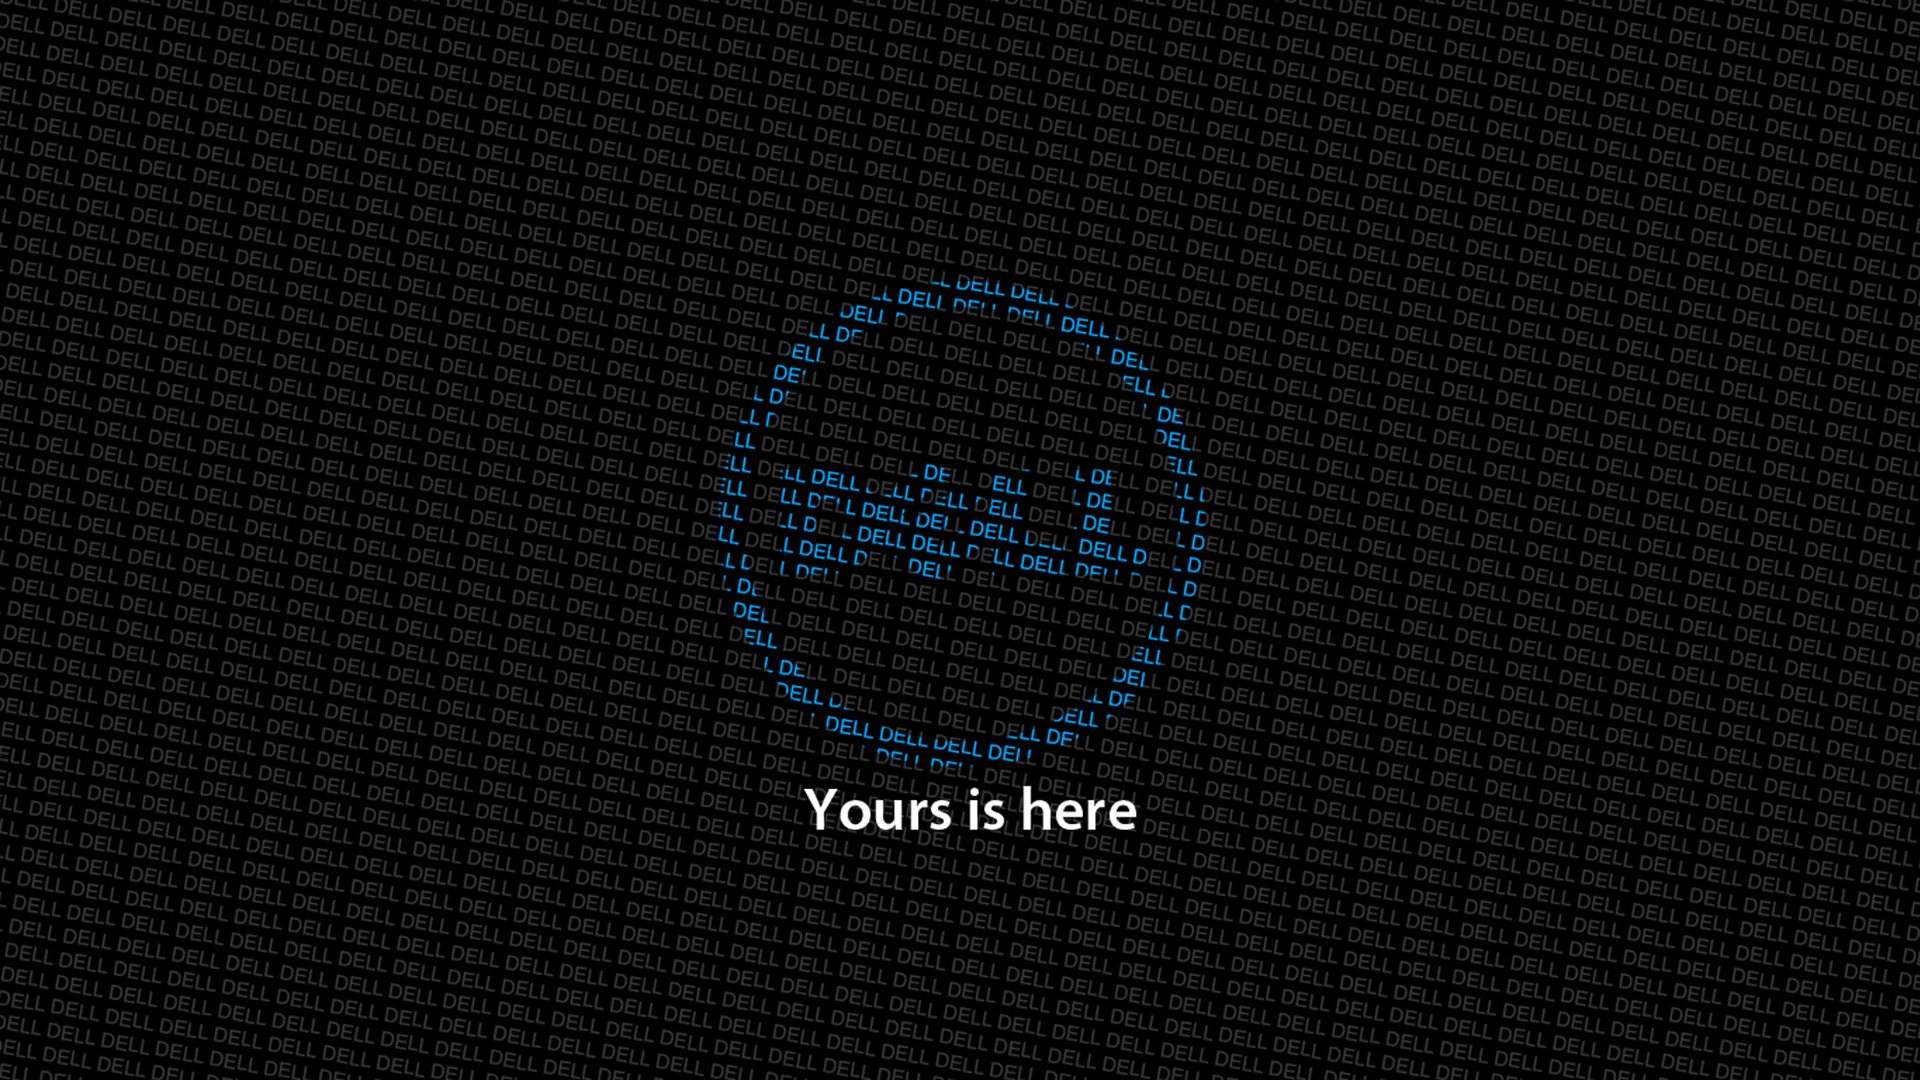 Dell Wallpaper For